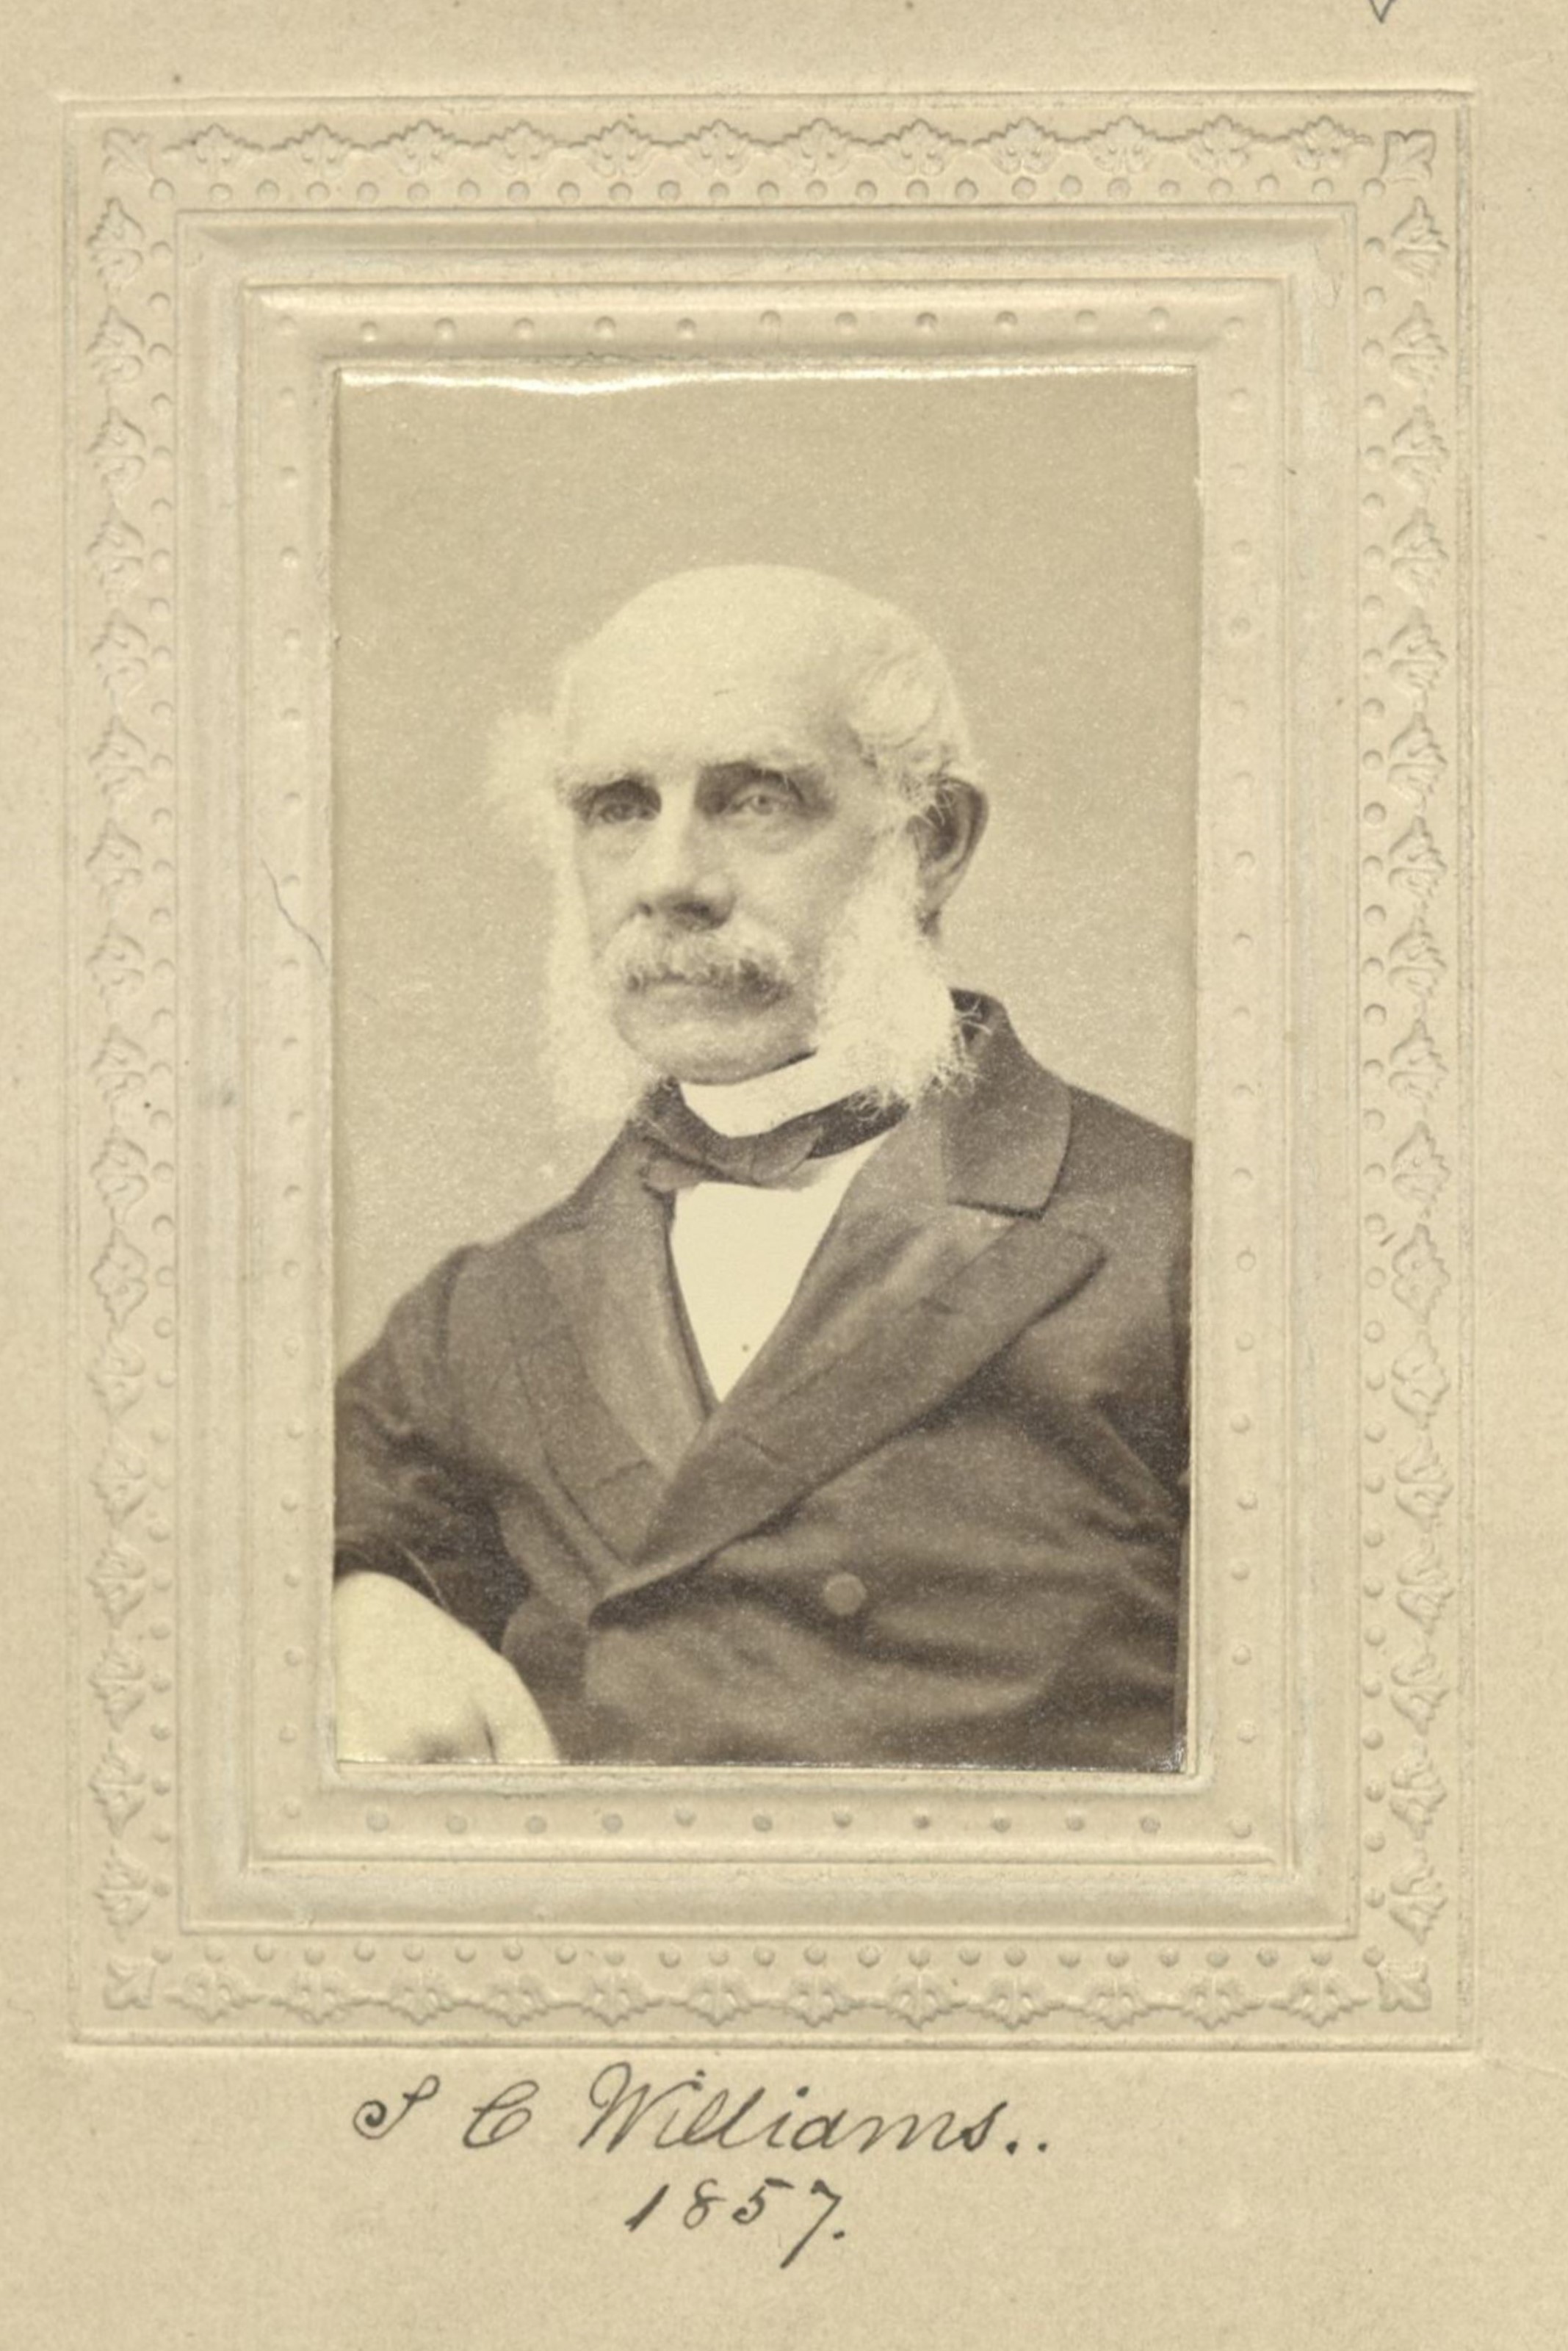 Member portrait of Stephen C. Williams